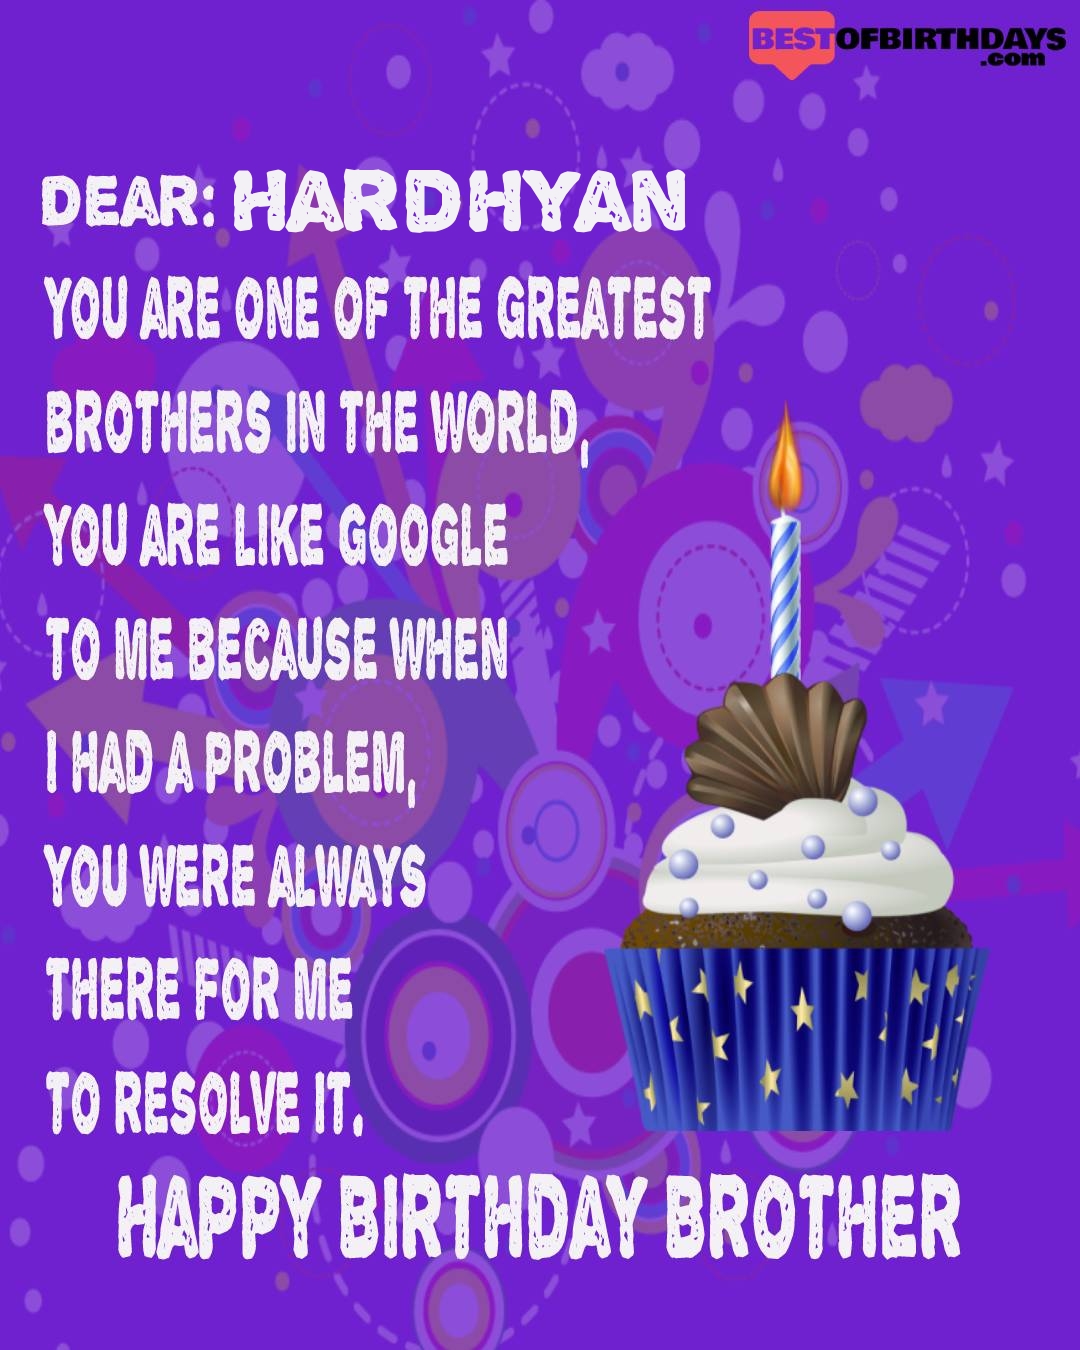 Happy birthday hardhyan bhai brother bro